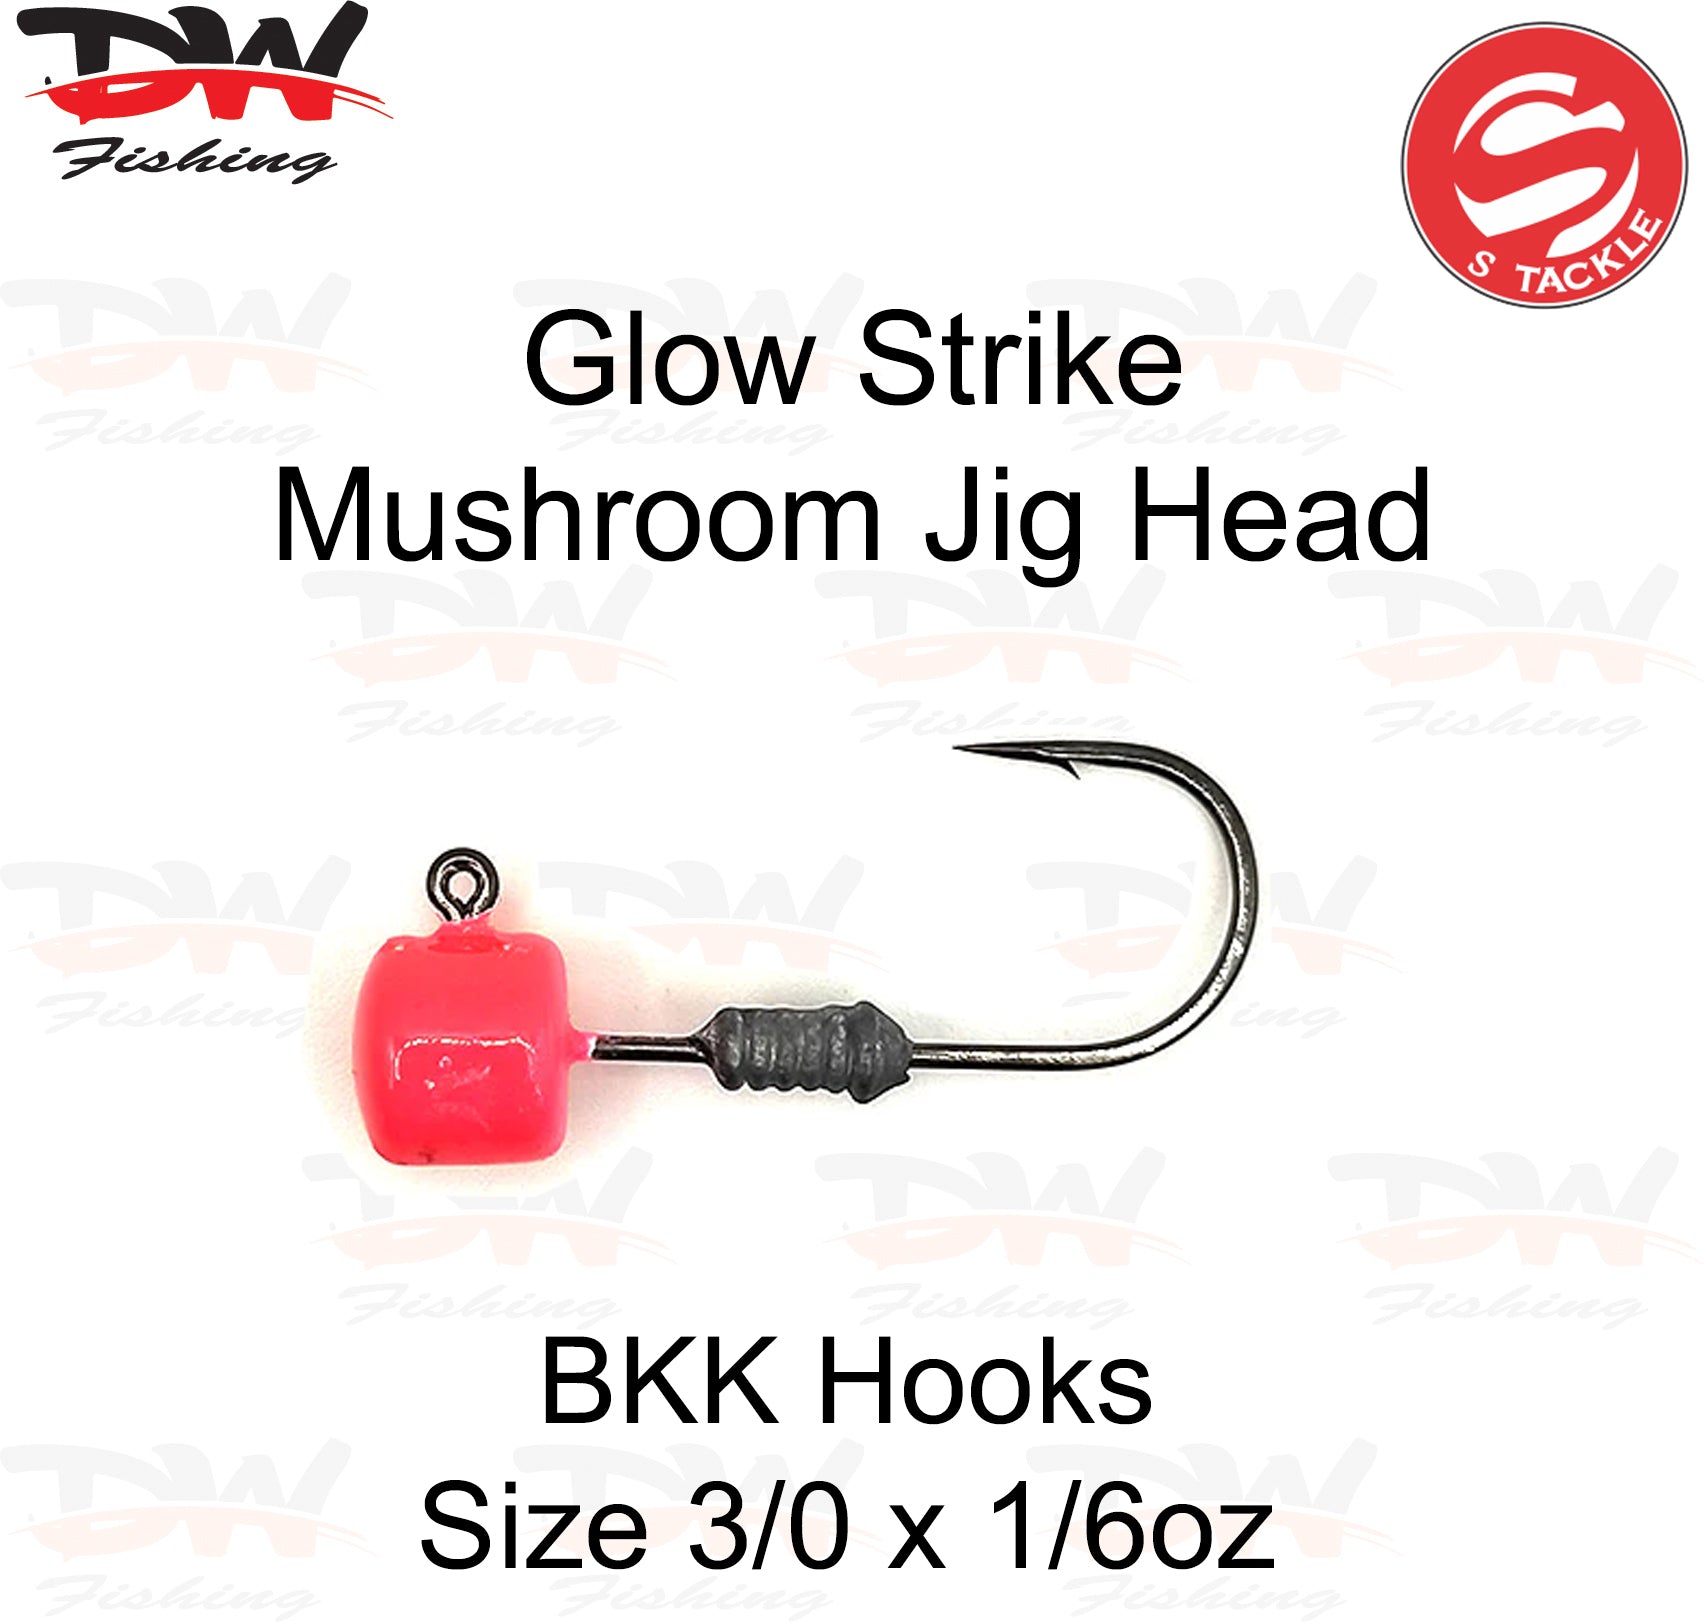 S Tackle Glow strike mushroom jig head on BKK hooks size 3/0 1/6oz